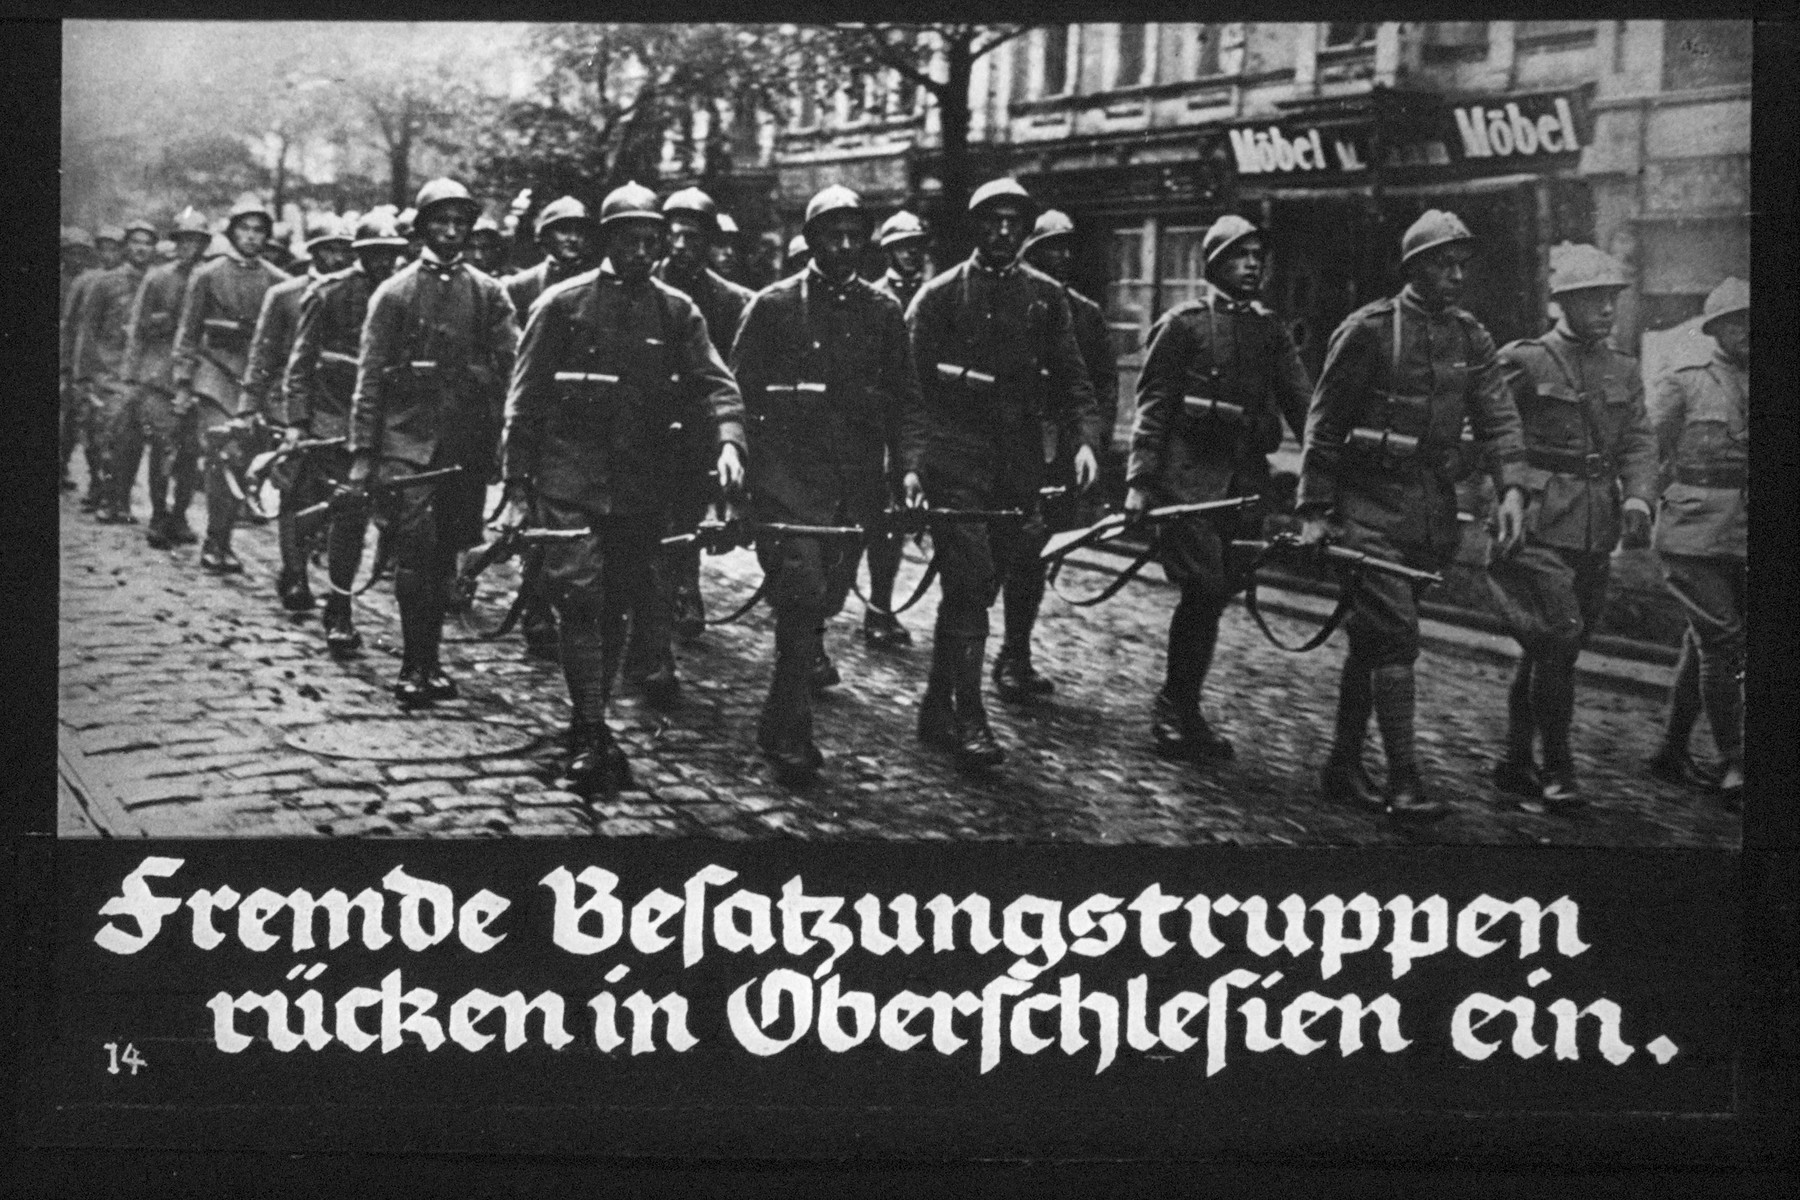 15th Nazi propaganda slide from Hitler Youth educational material titled "Border Land Upper Silesia."

Fremde Besatzungstruppen rücken in Oberschlesien ein.
//
Foreign occupation troops move into Upper Silesia.